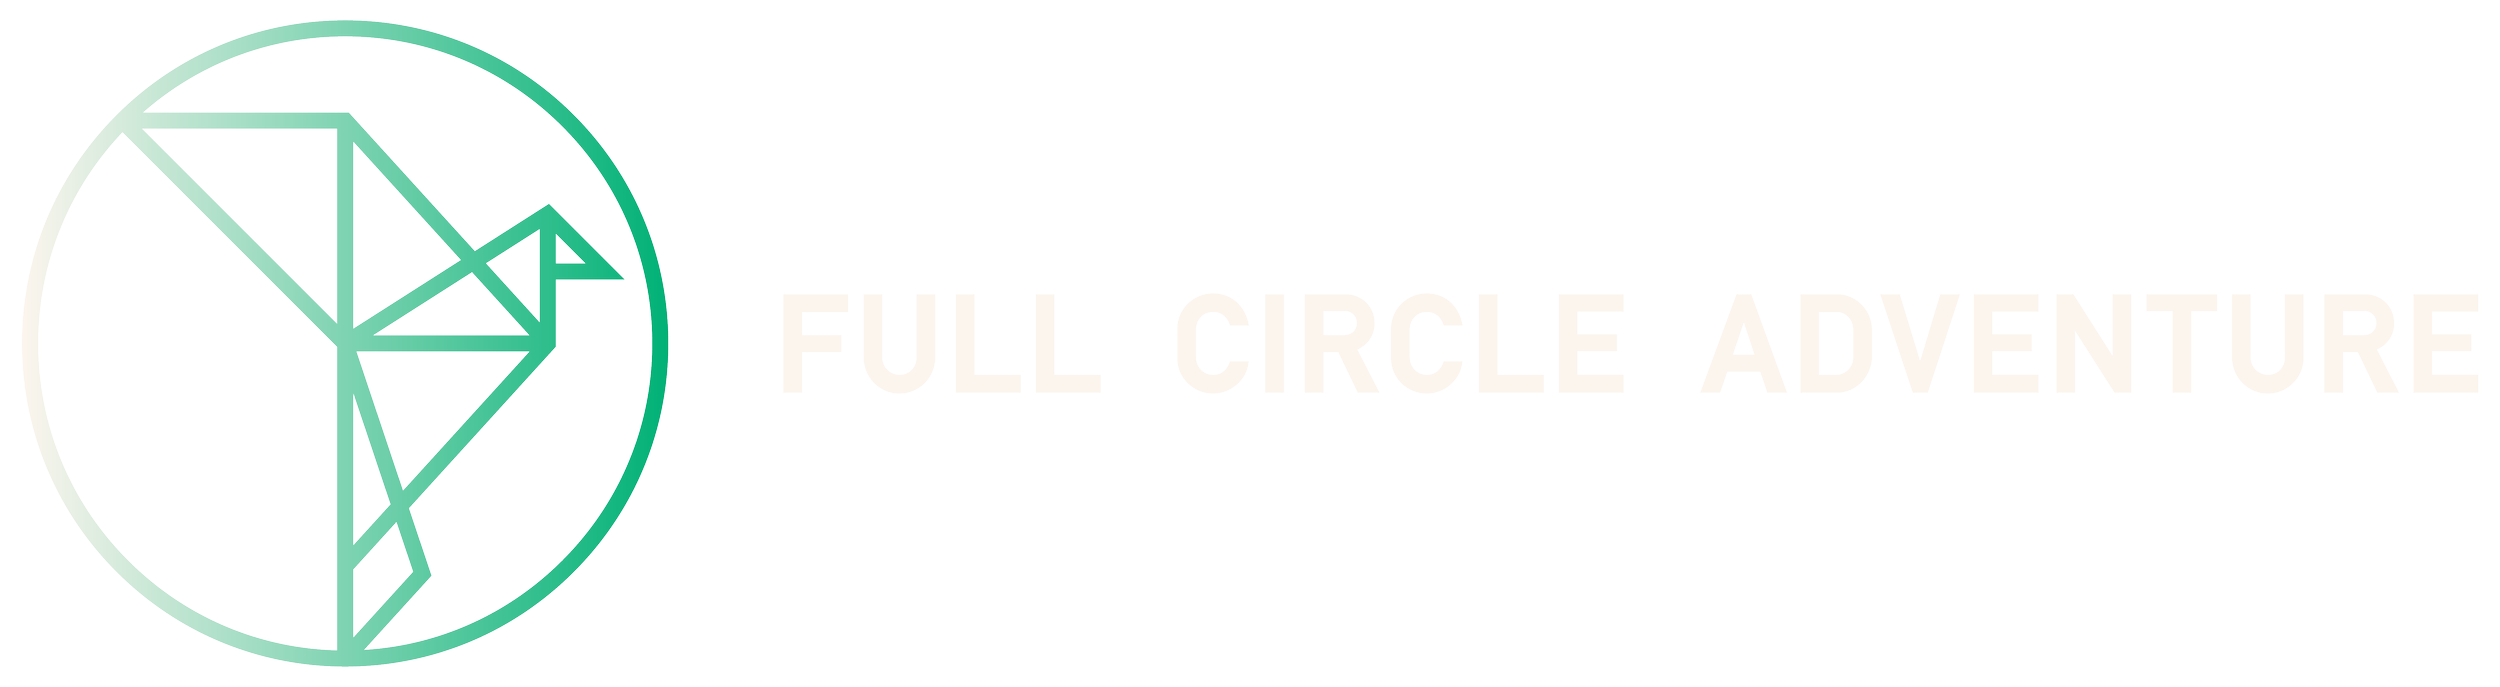 Full Circle Adventure